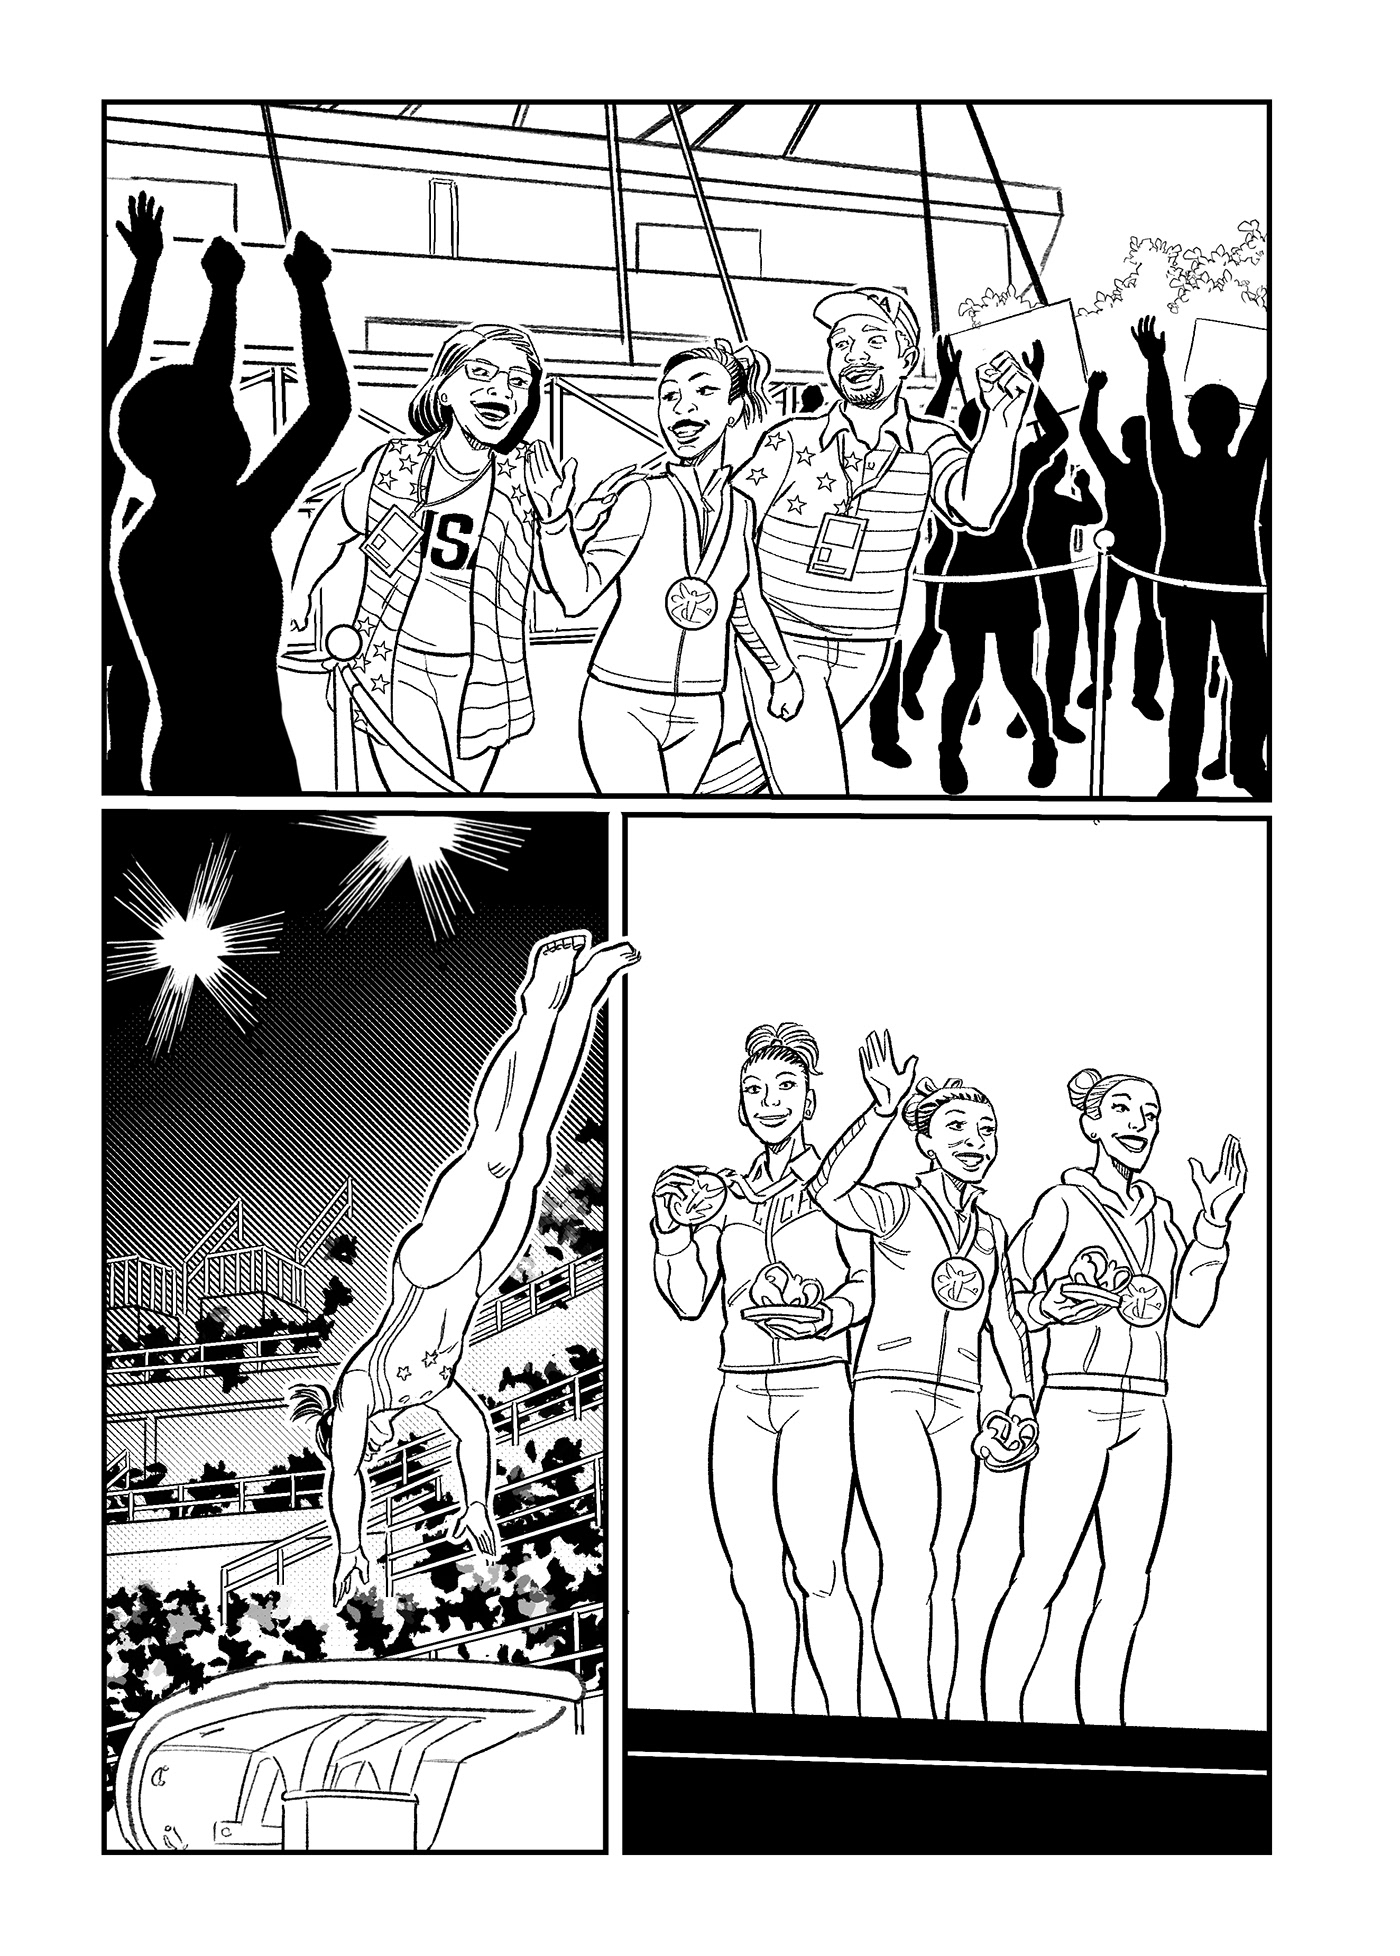 comic art comicbook Sequential Art Olympics gymnastics Drawing  ILLUSTRATION  line art ink